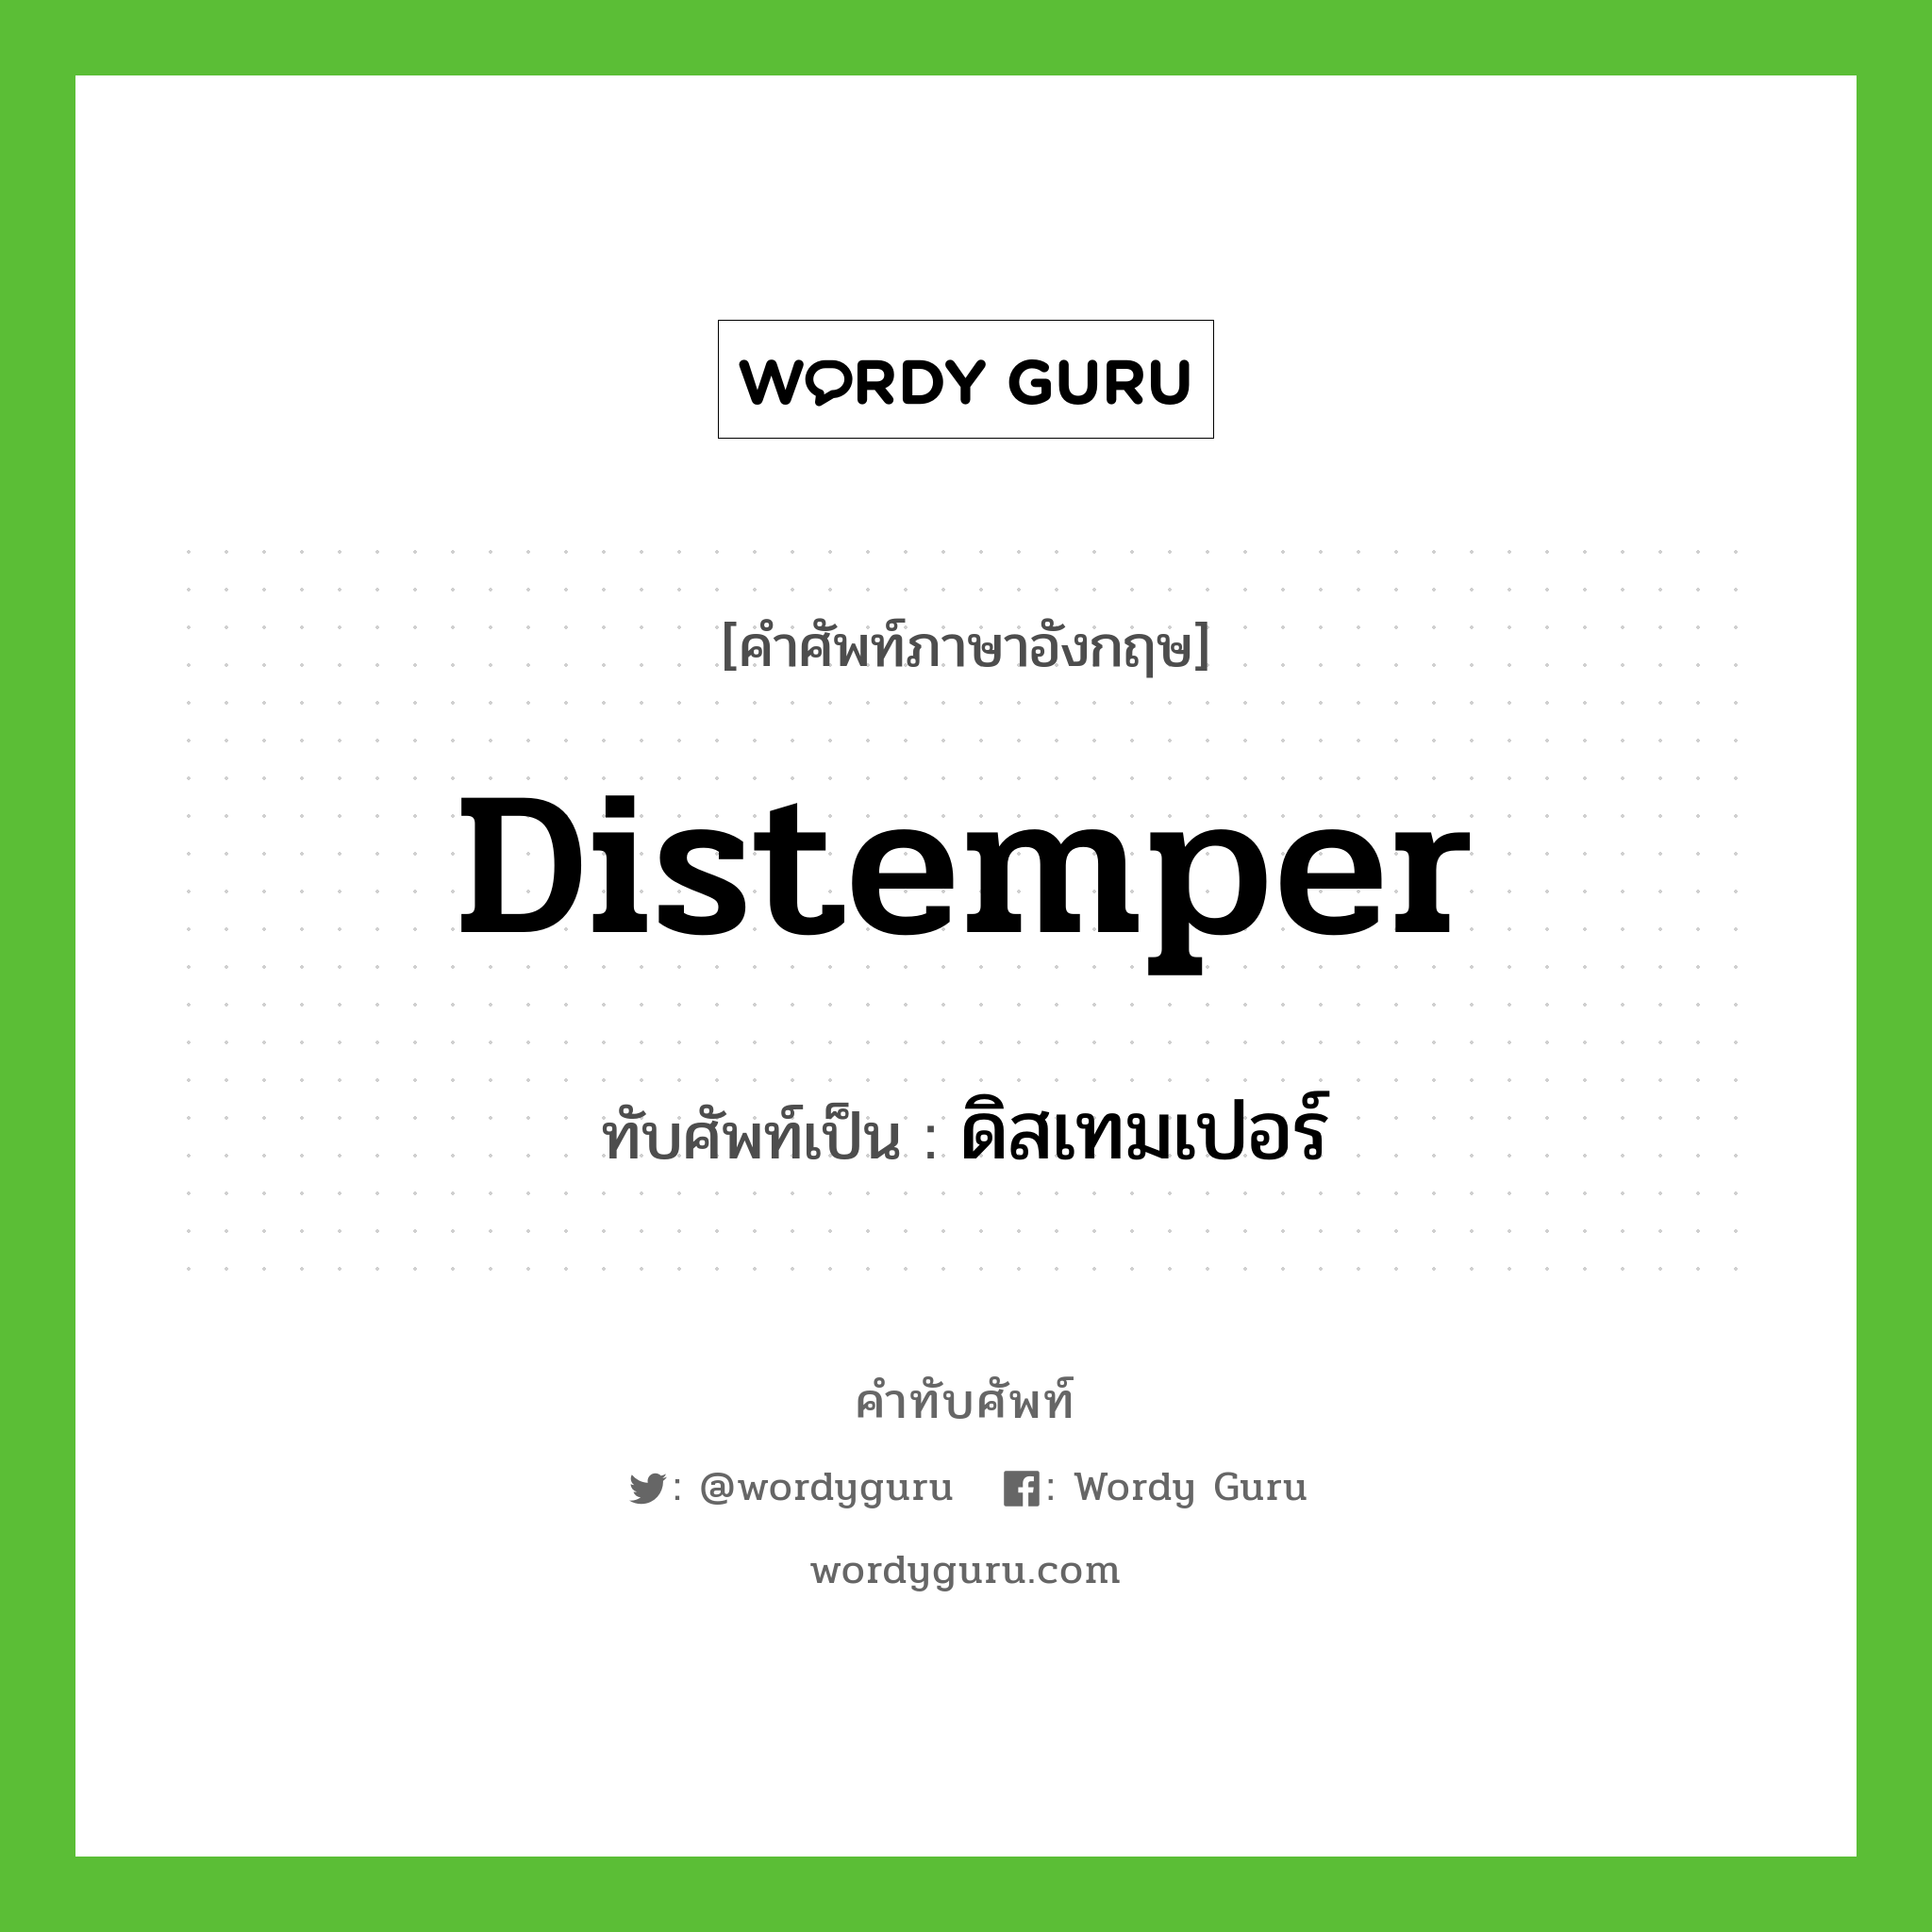 distemper เขียนเป็นคำไทยว่าอะไร?, คำศัพท์ภาษาอังกฤษ distemper ทับศัพท์เป็น ดิสเทมเปอร์